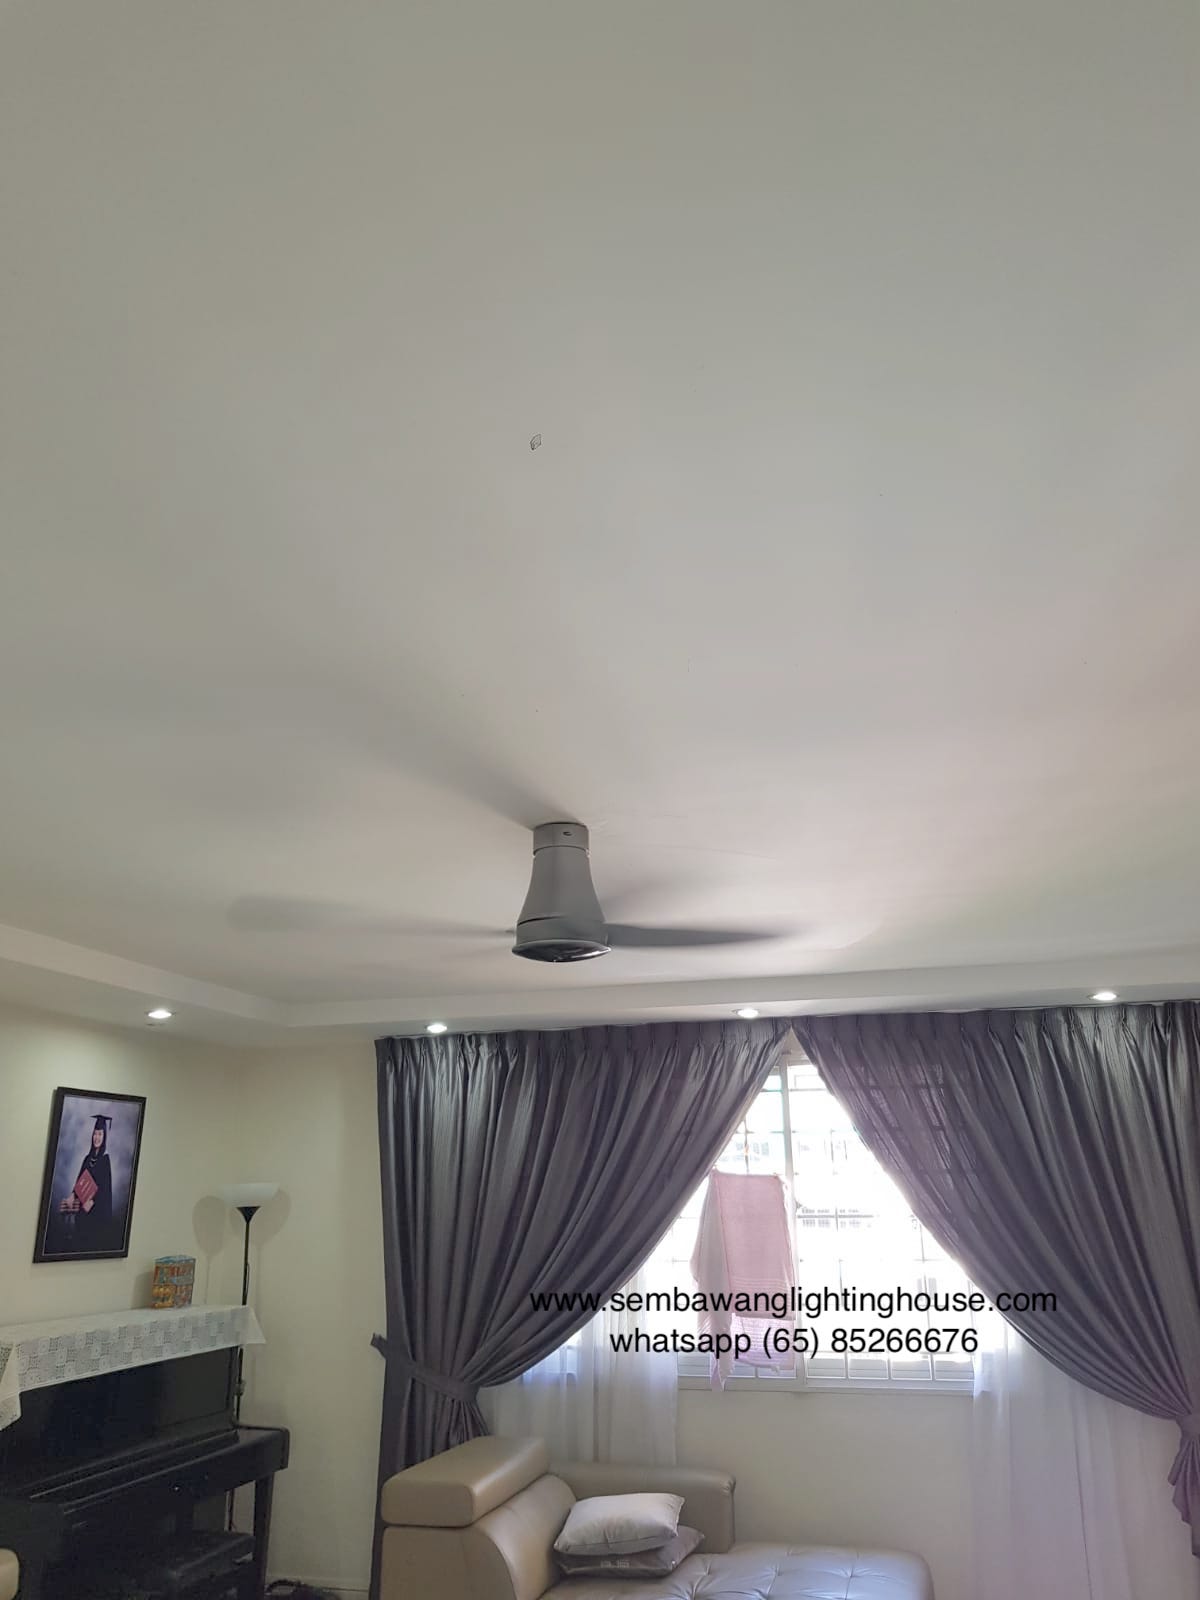 kdk-t60aw-ceiling-fan-without-light-sembawang-lighting-house-sample-01.jpg